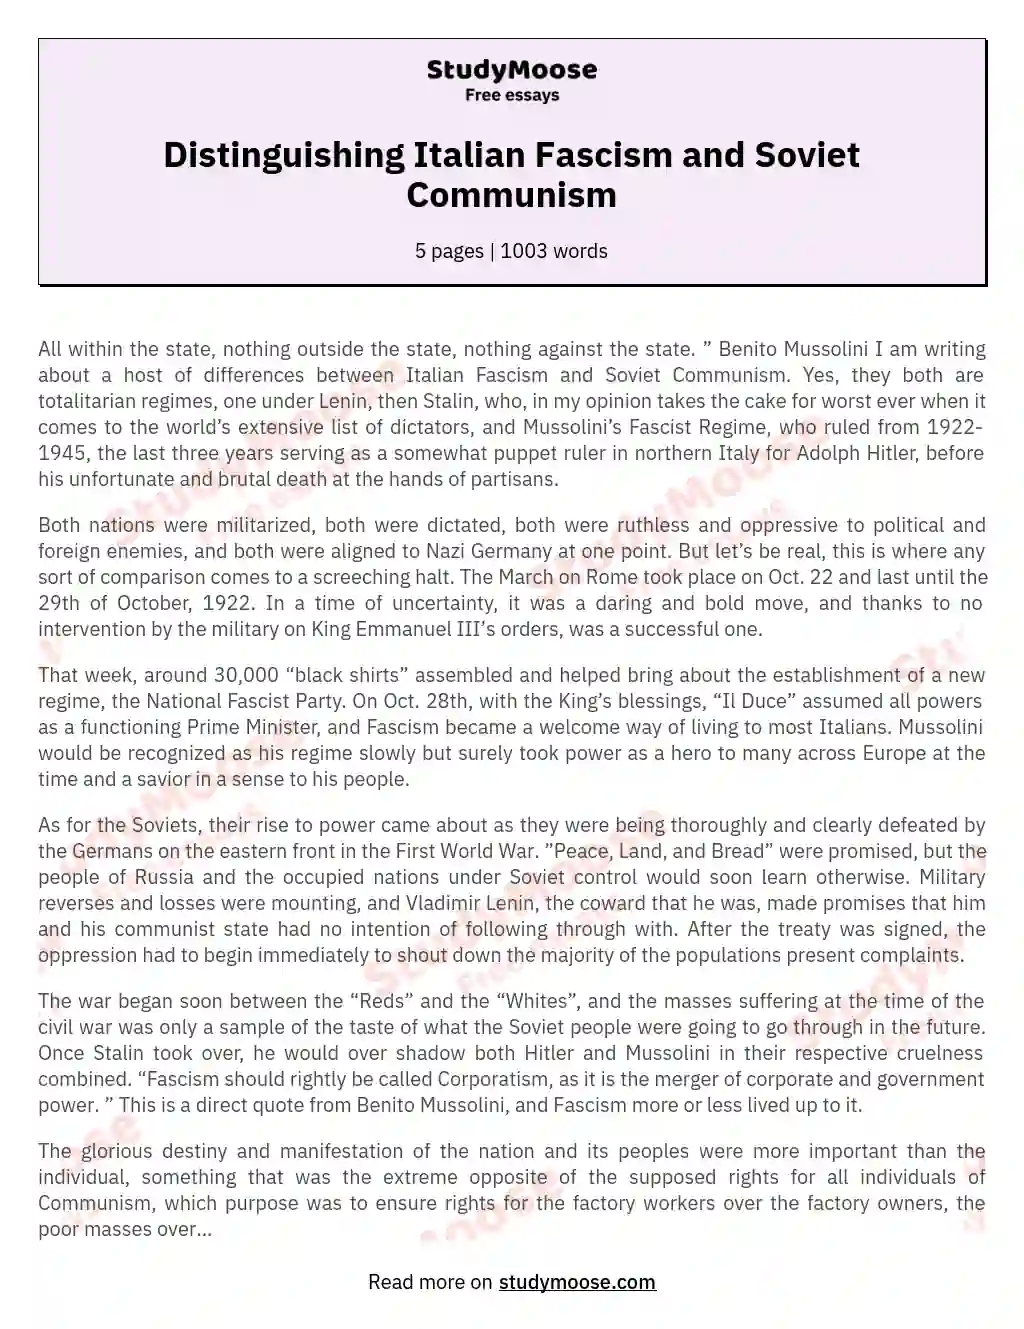 essay about communism